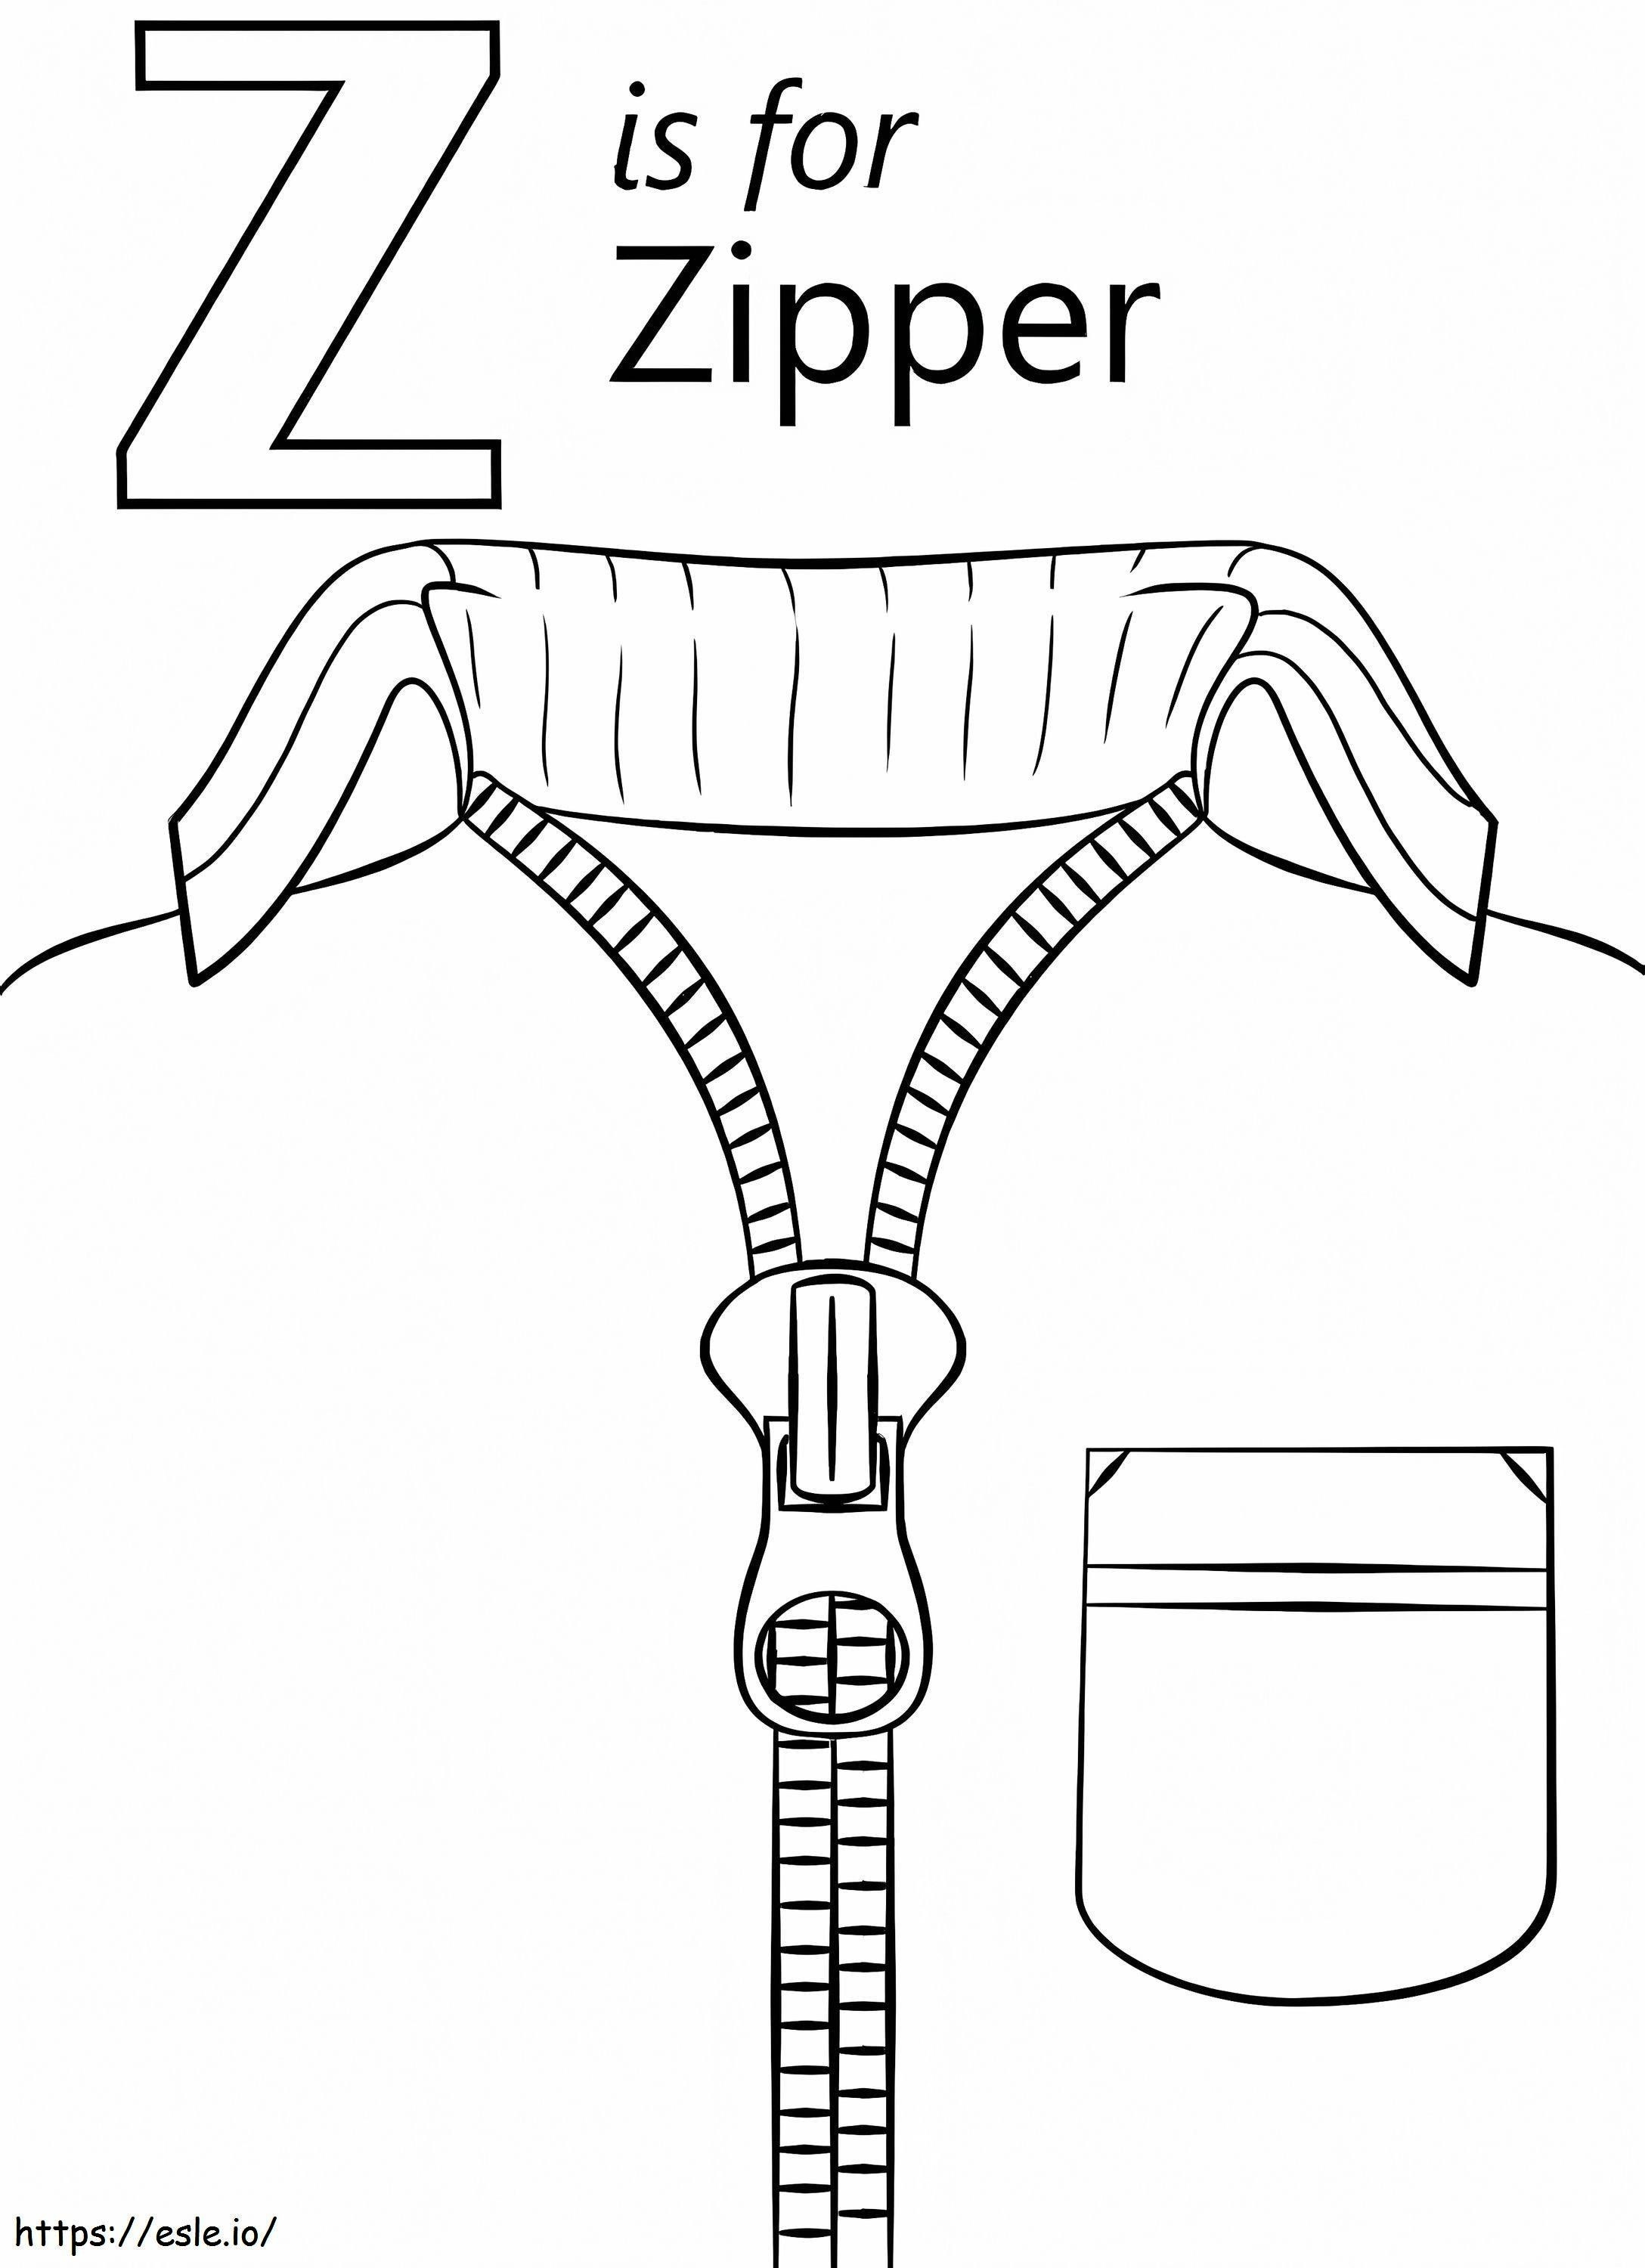 Letter Z Zipper Jacket coloring page